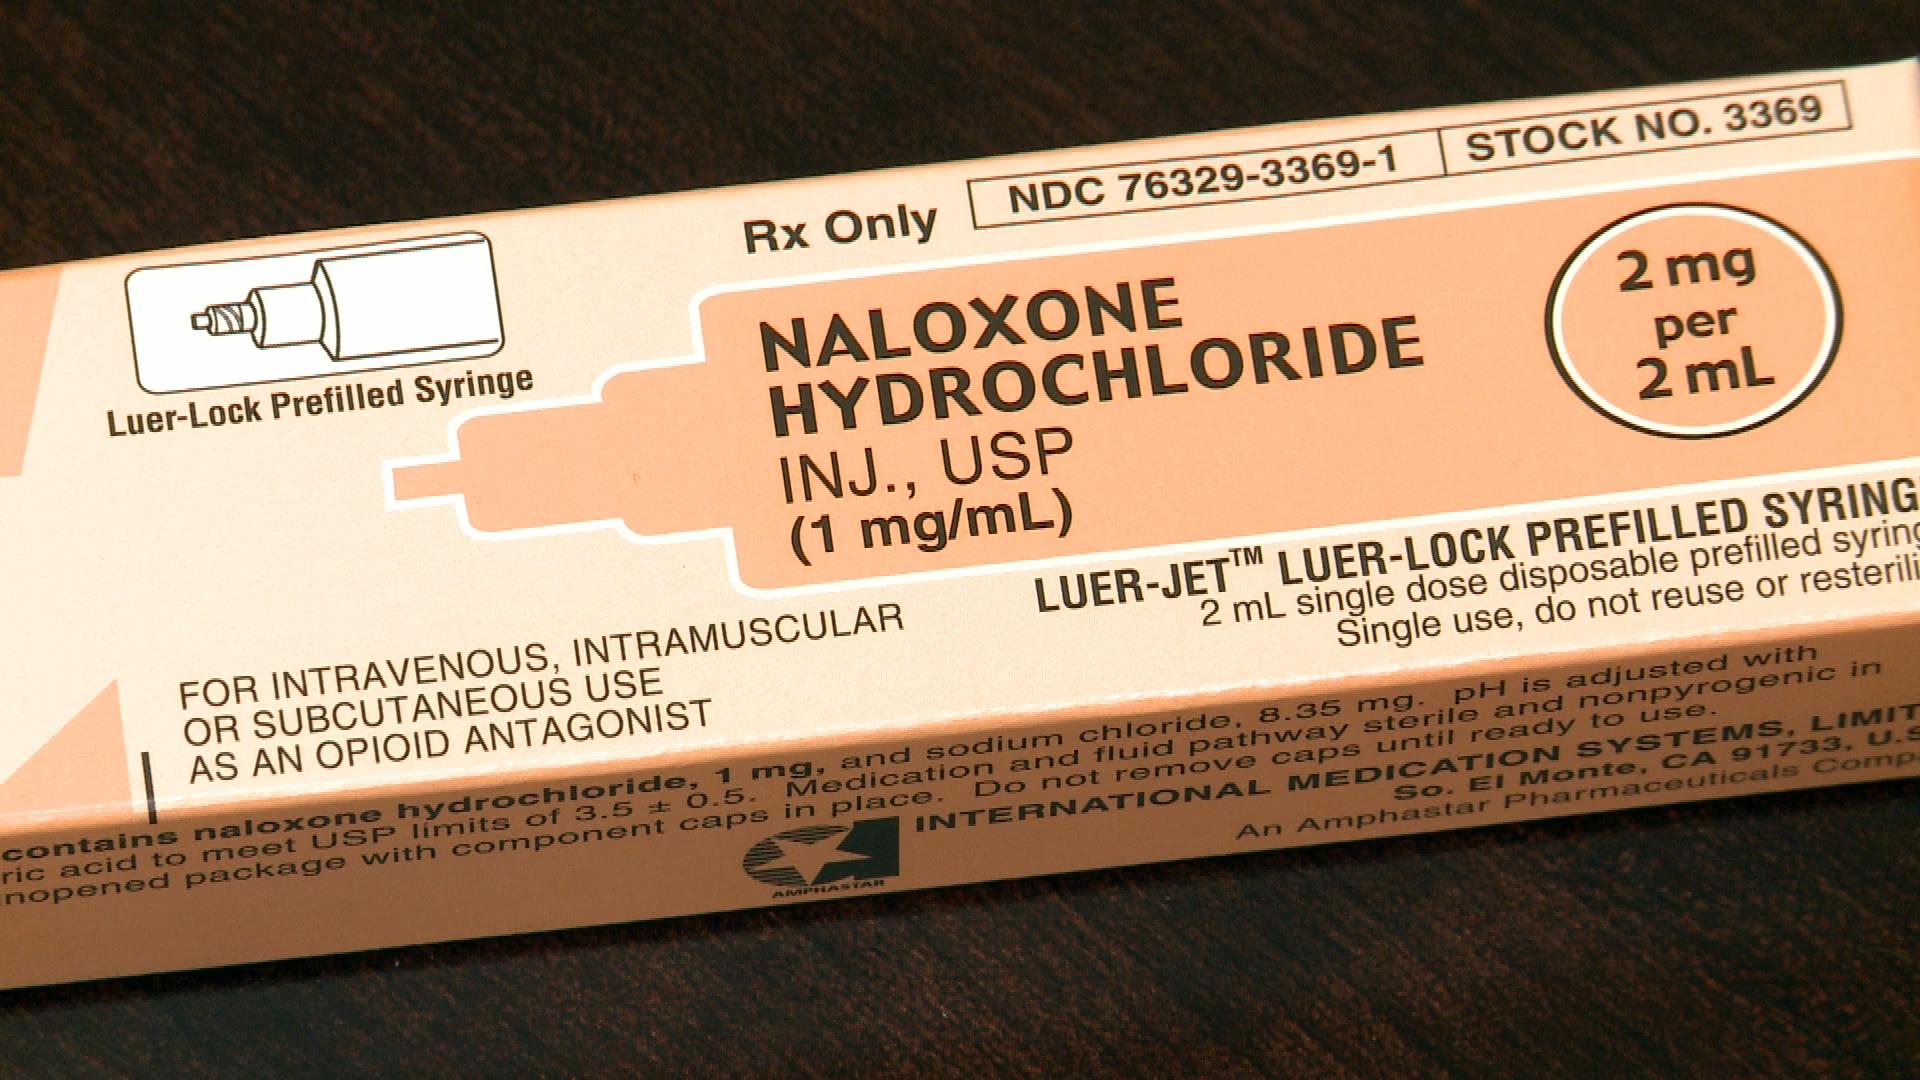 The overdose-reversal drug, Nalaxone